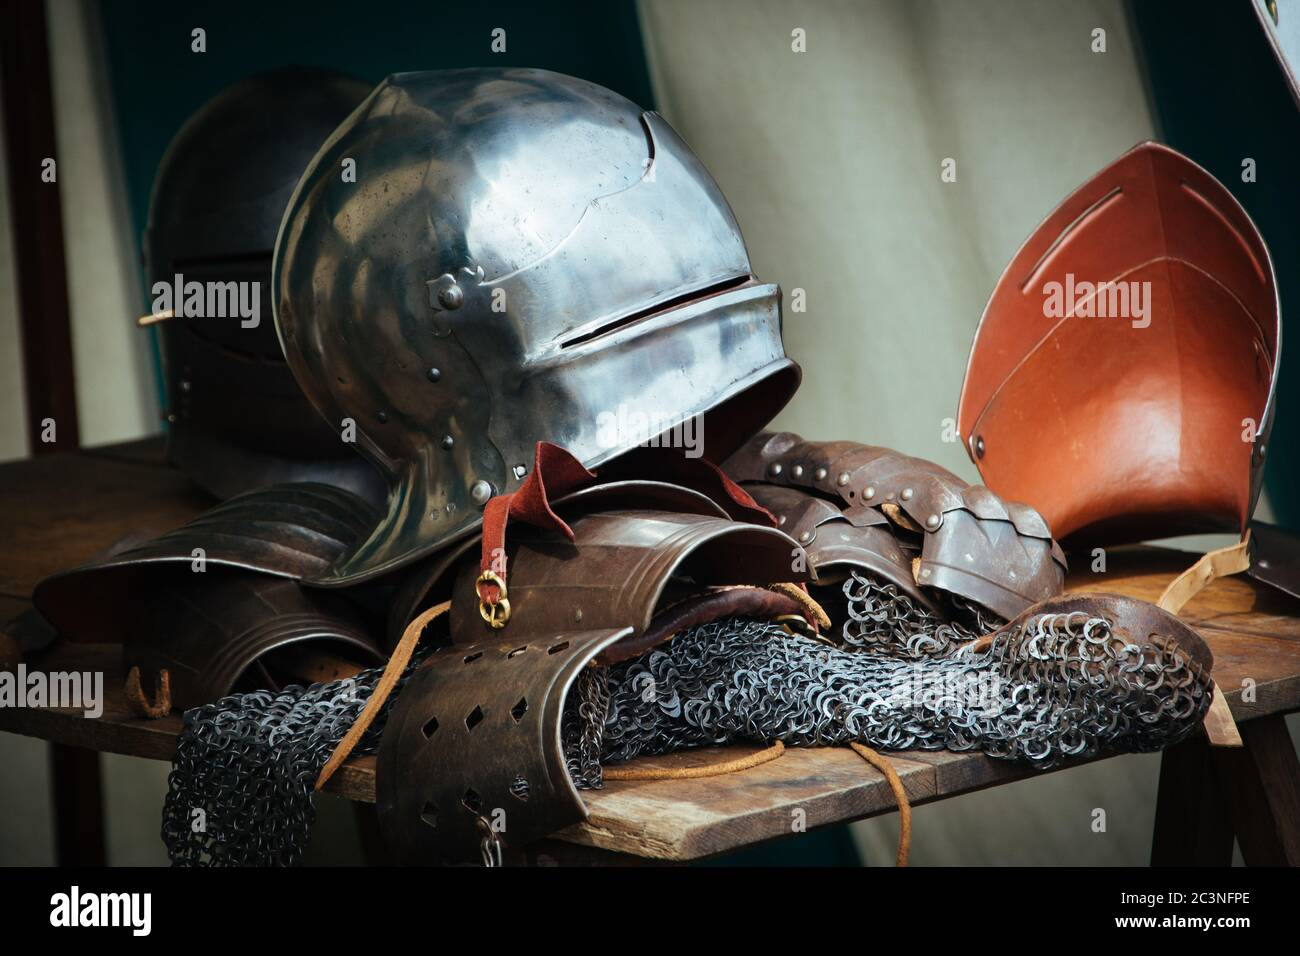 Playmobil knights helmet sword gems medieval knight medieval dwarf